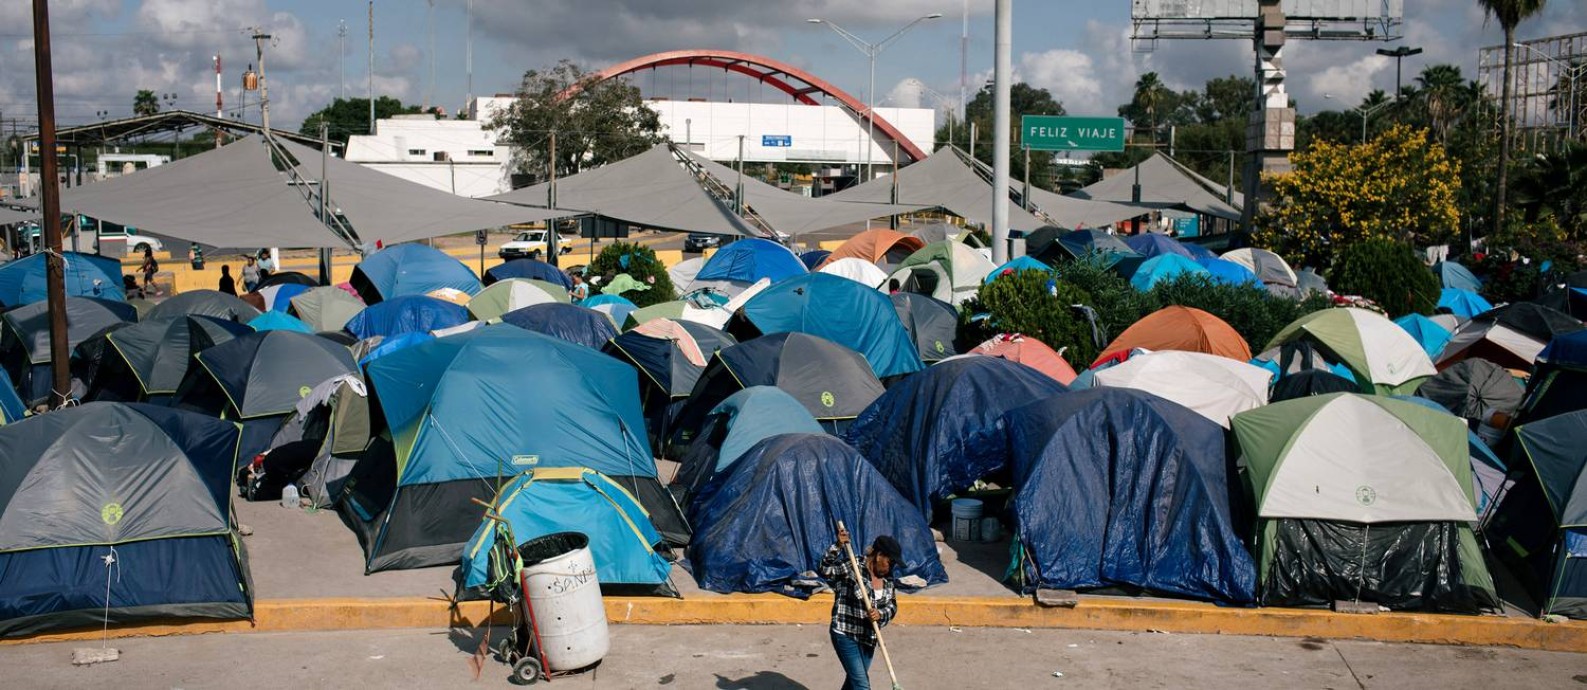 Acampamento improvisado de migrantes em Matamoros, no México Foto: ALYSSA SCHUKAR / NYT